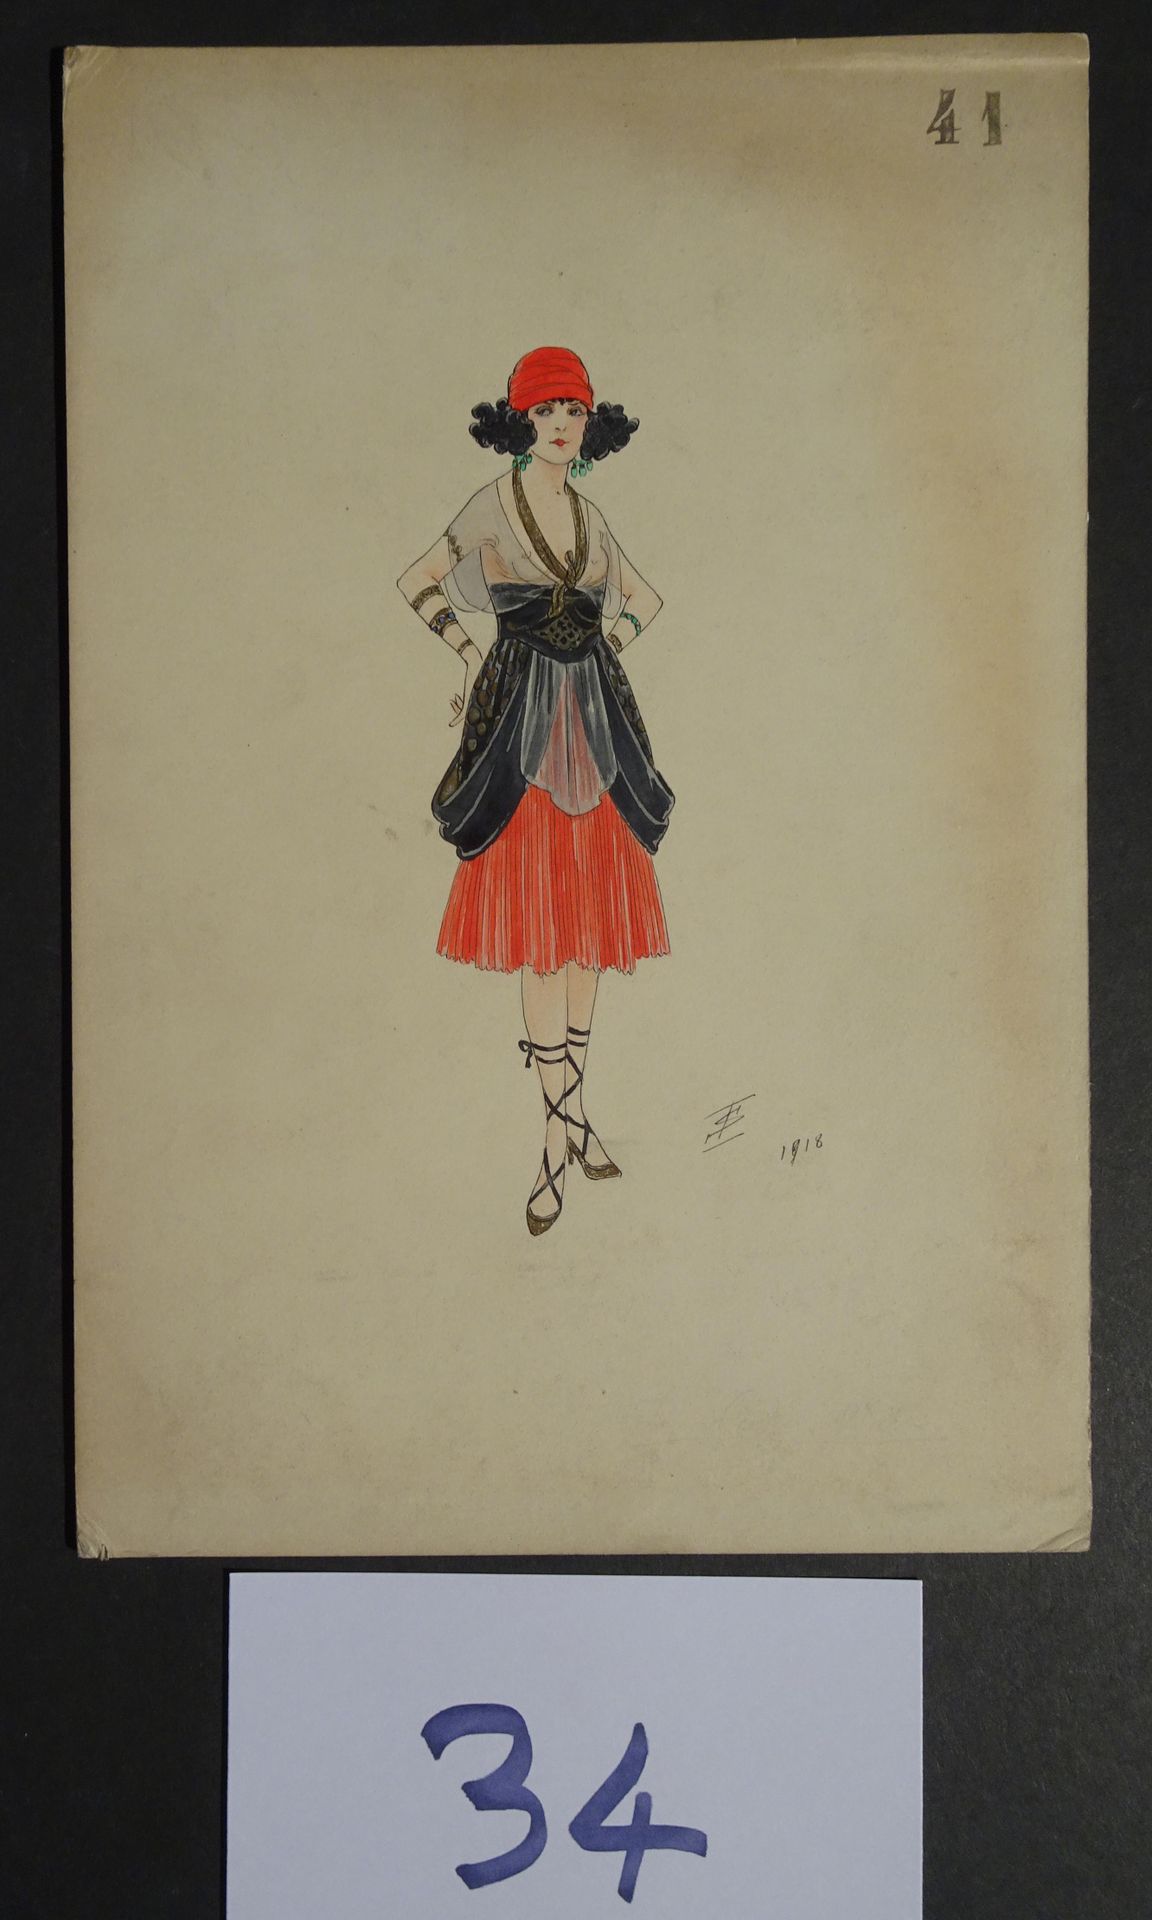 SOKOLOFF SOKOLOFF IGOR (principios del siglo XX) 

"Mujer con turbante rojo". Pl&hellip;